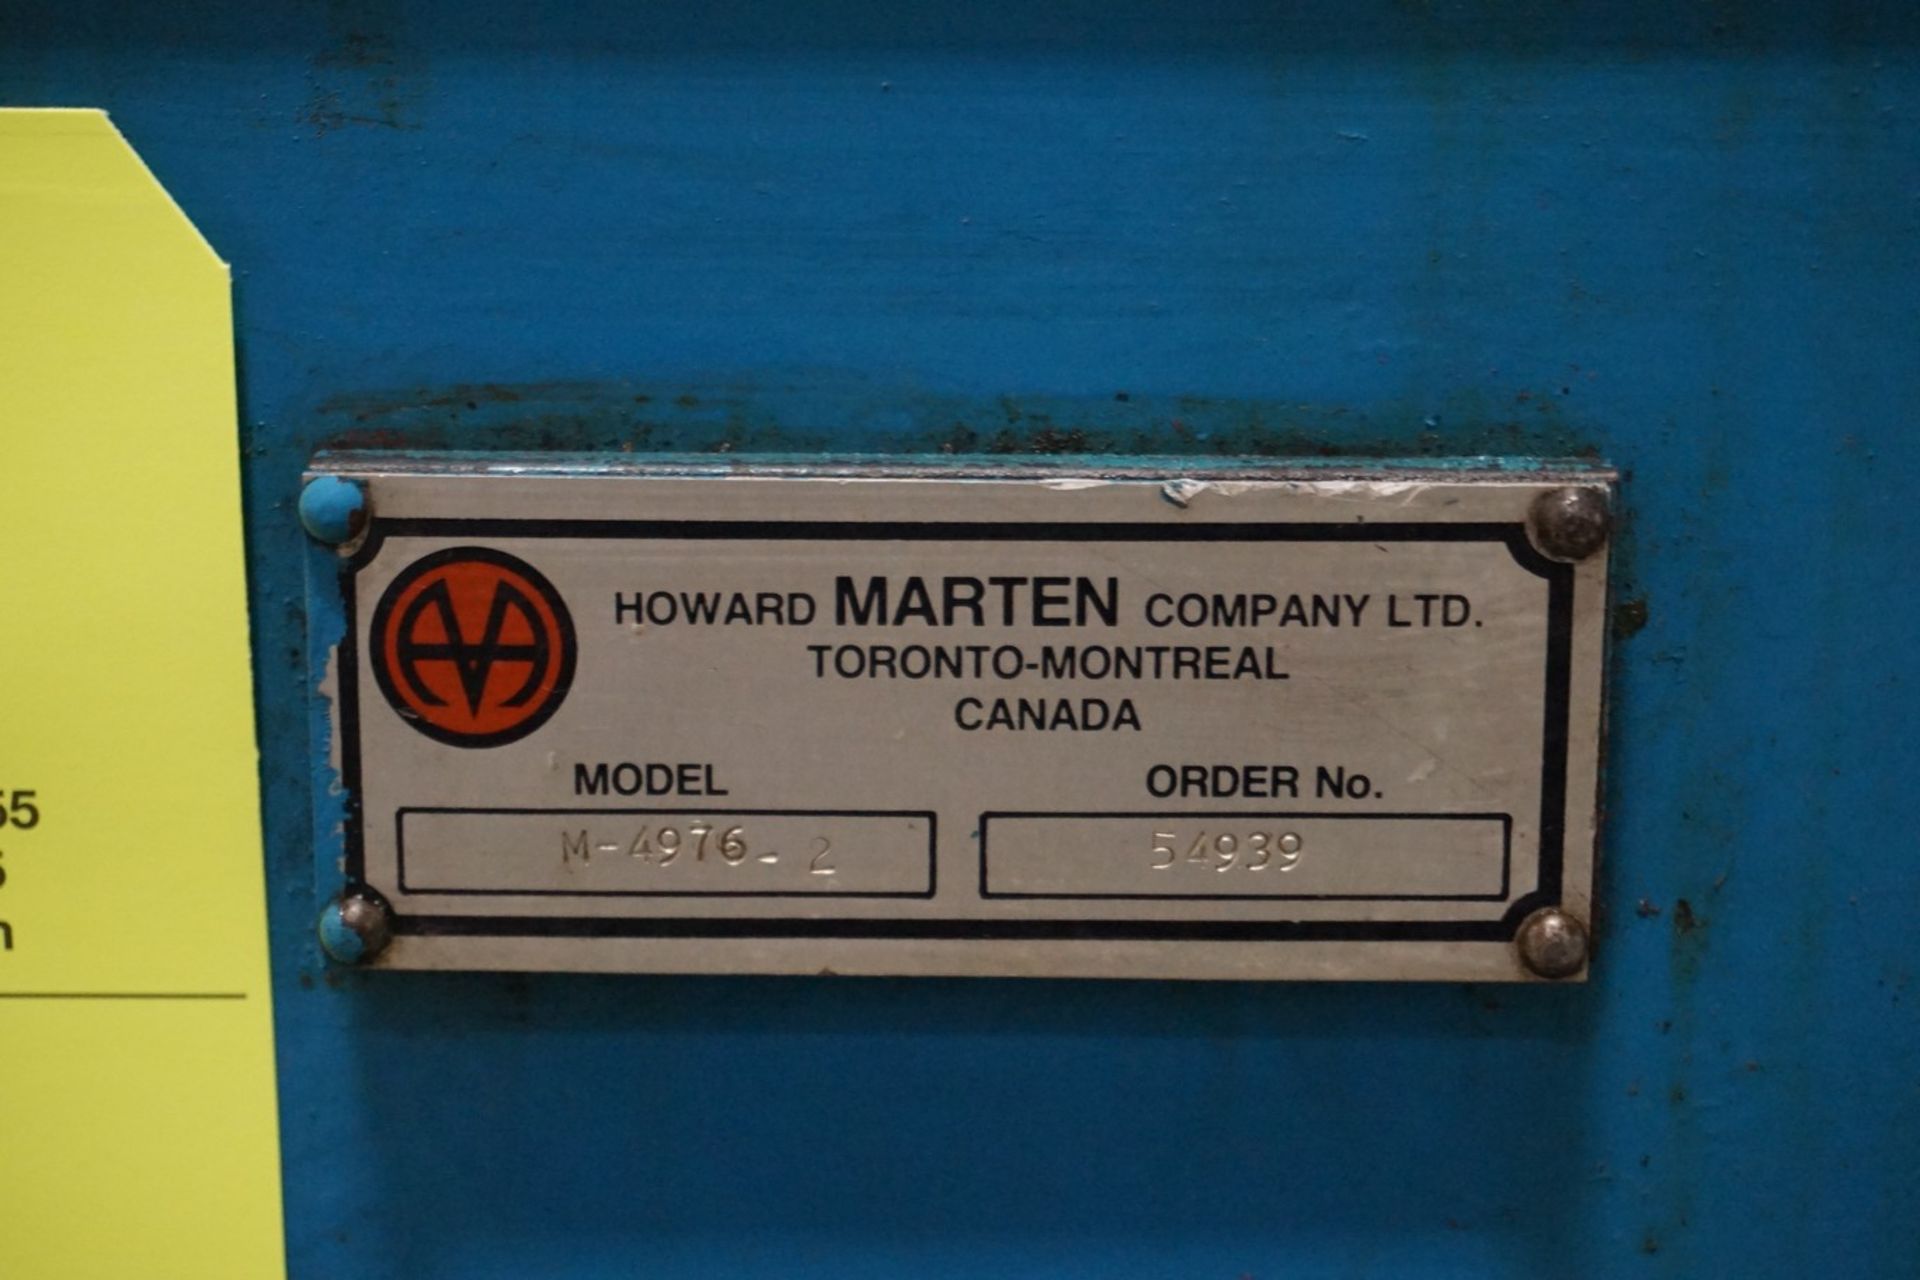 Marten Model M4976-2 Hydraulic Power Pack - Image 2 of 2